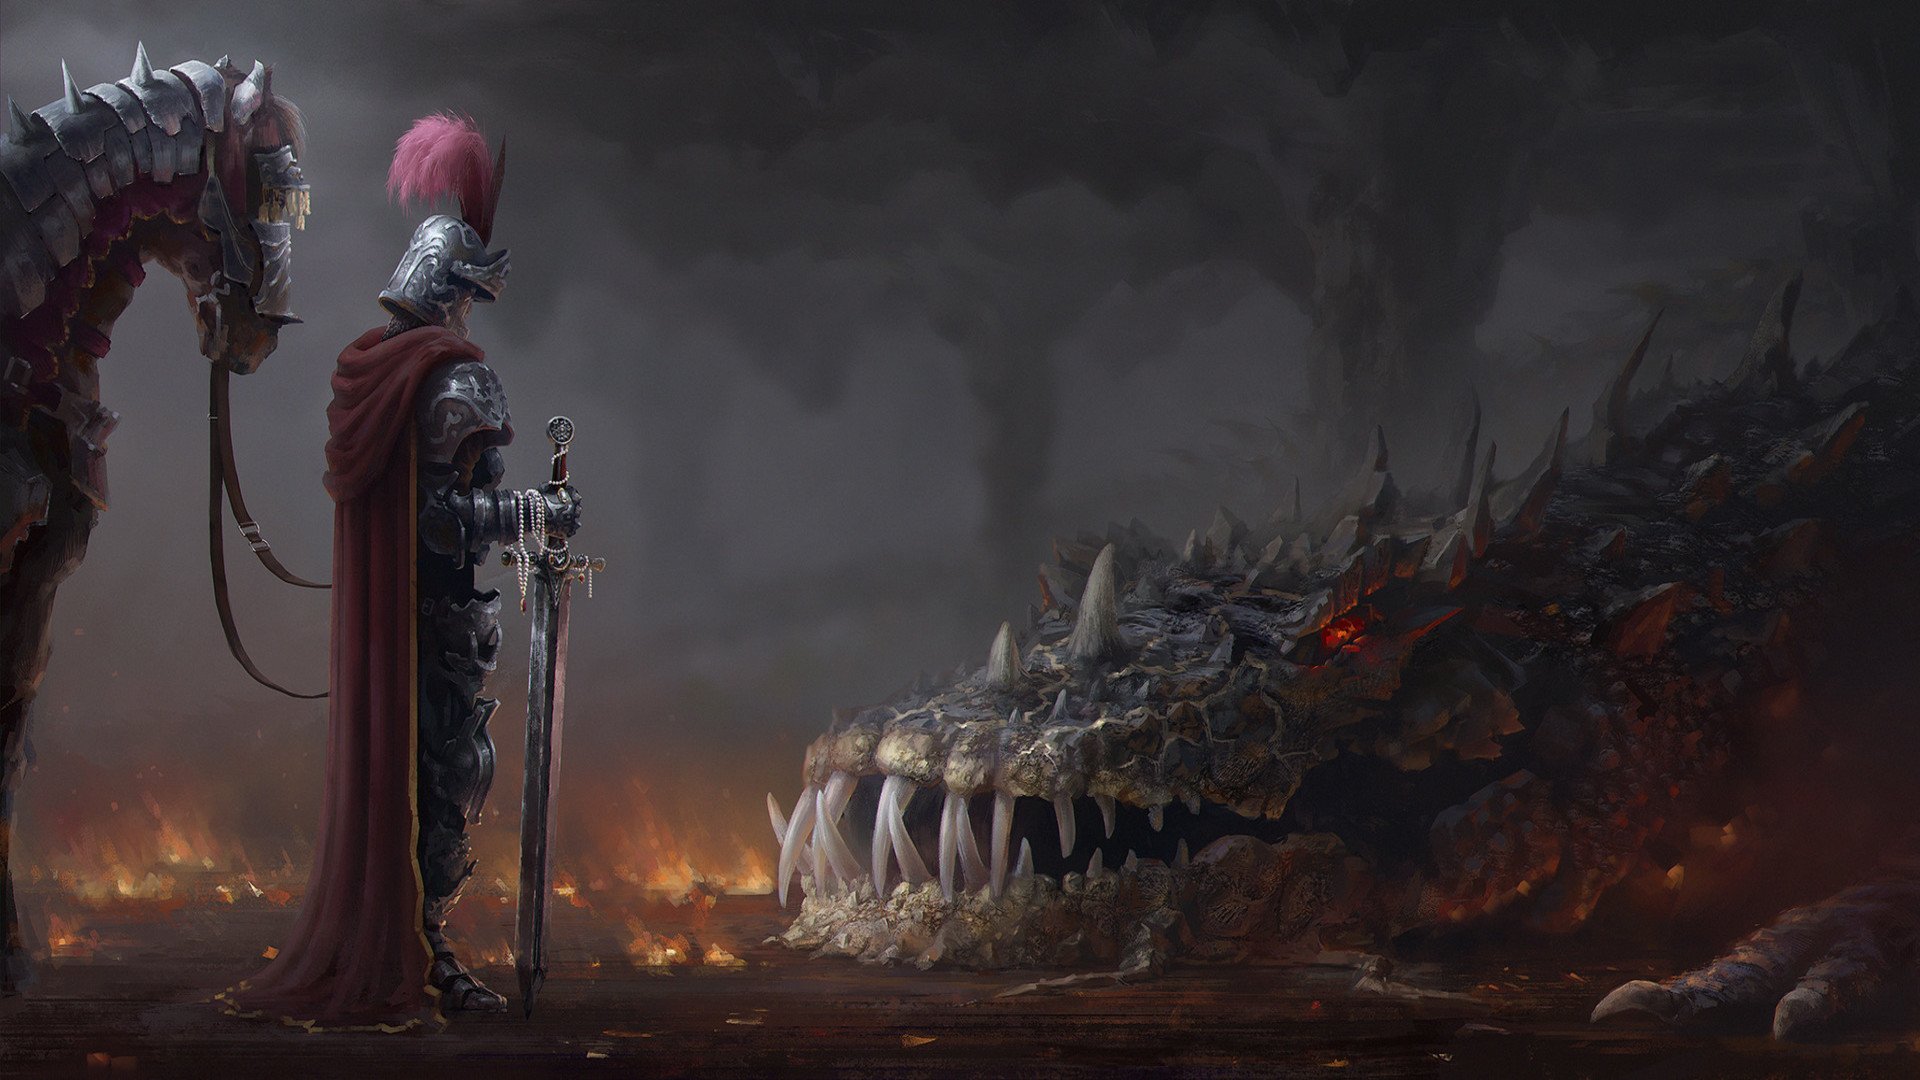 General 1920x1080 digital art fantasy art Andrew Palyanov knight dragon artwork fangs smoke sword armor horse red eyes